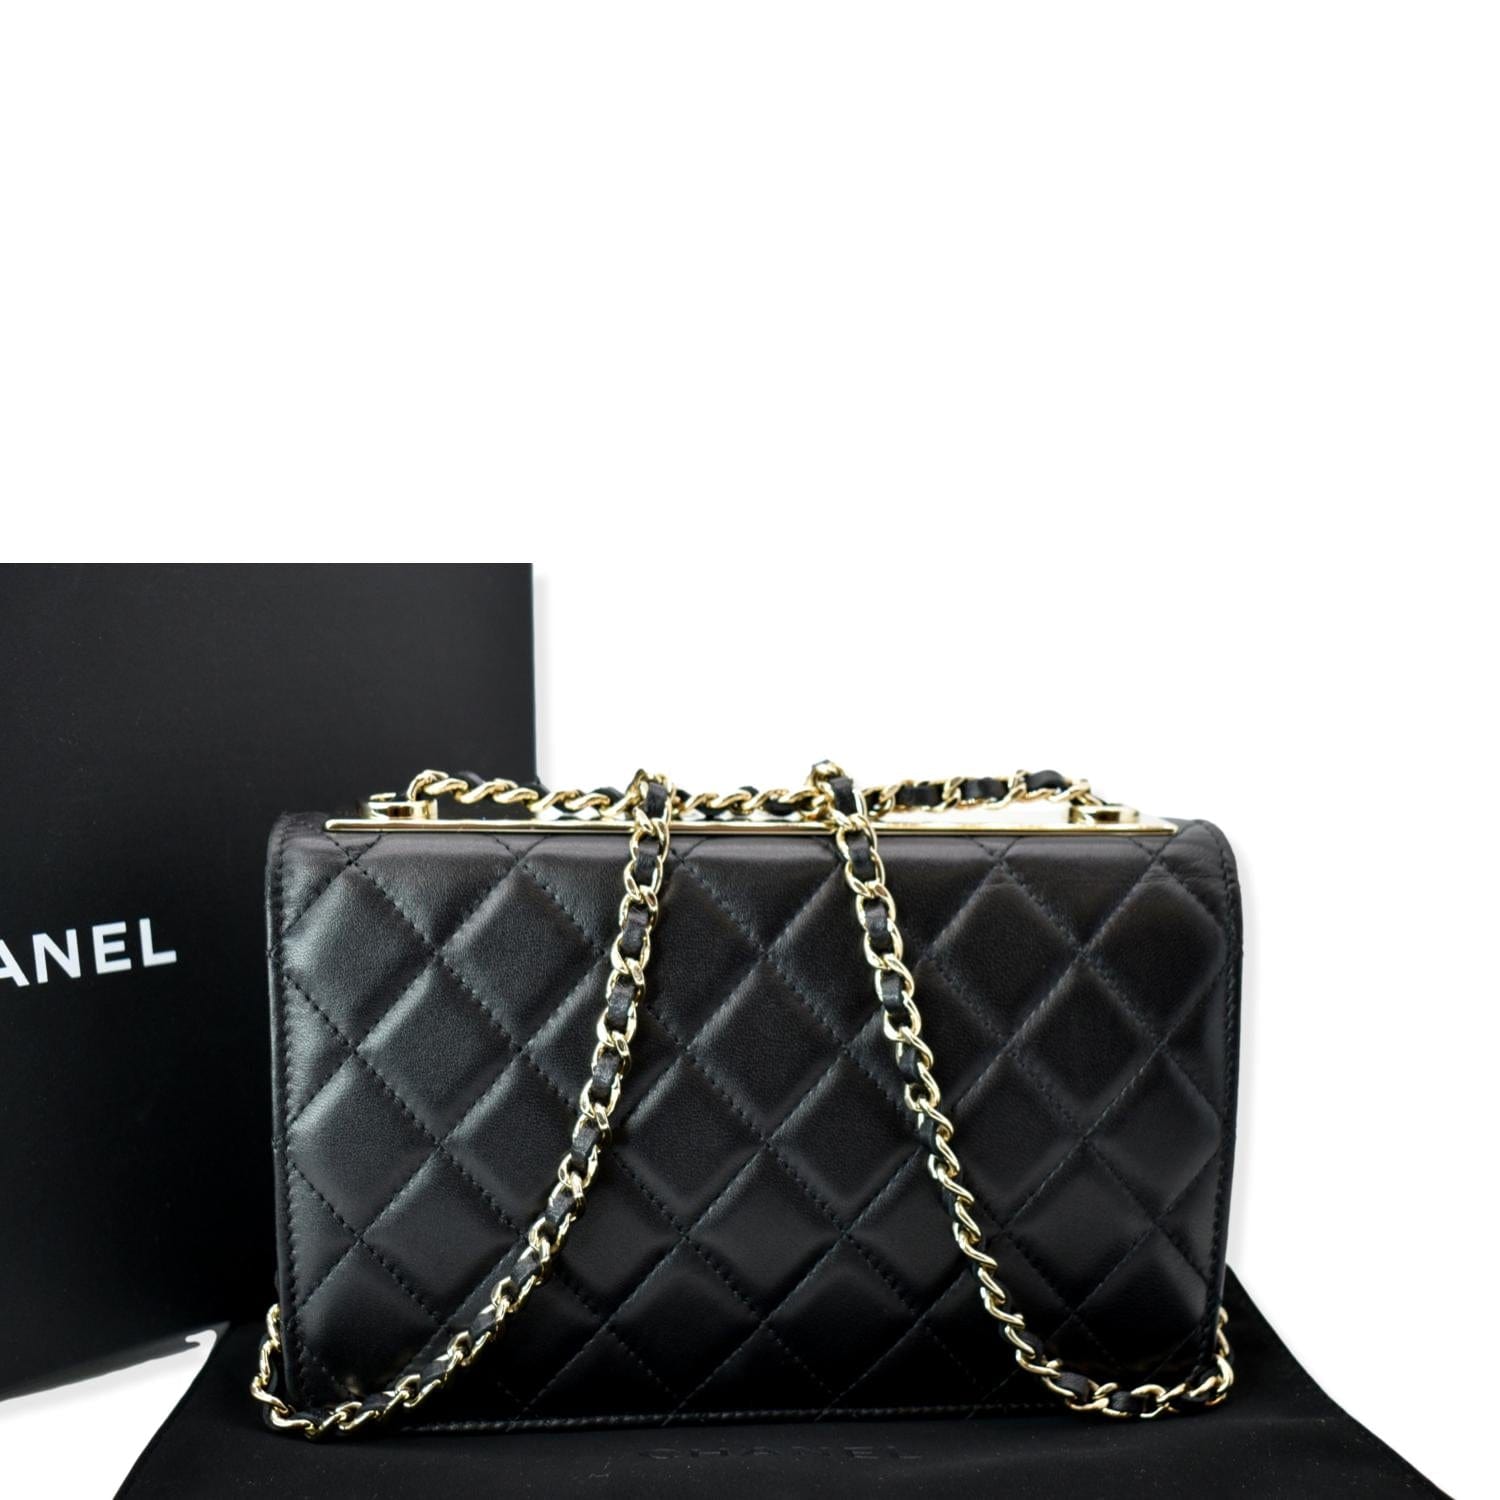 CHANEL Trendy CC Lambskin Leather Wallet On Chain Crossbody Bag Black